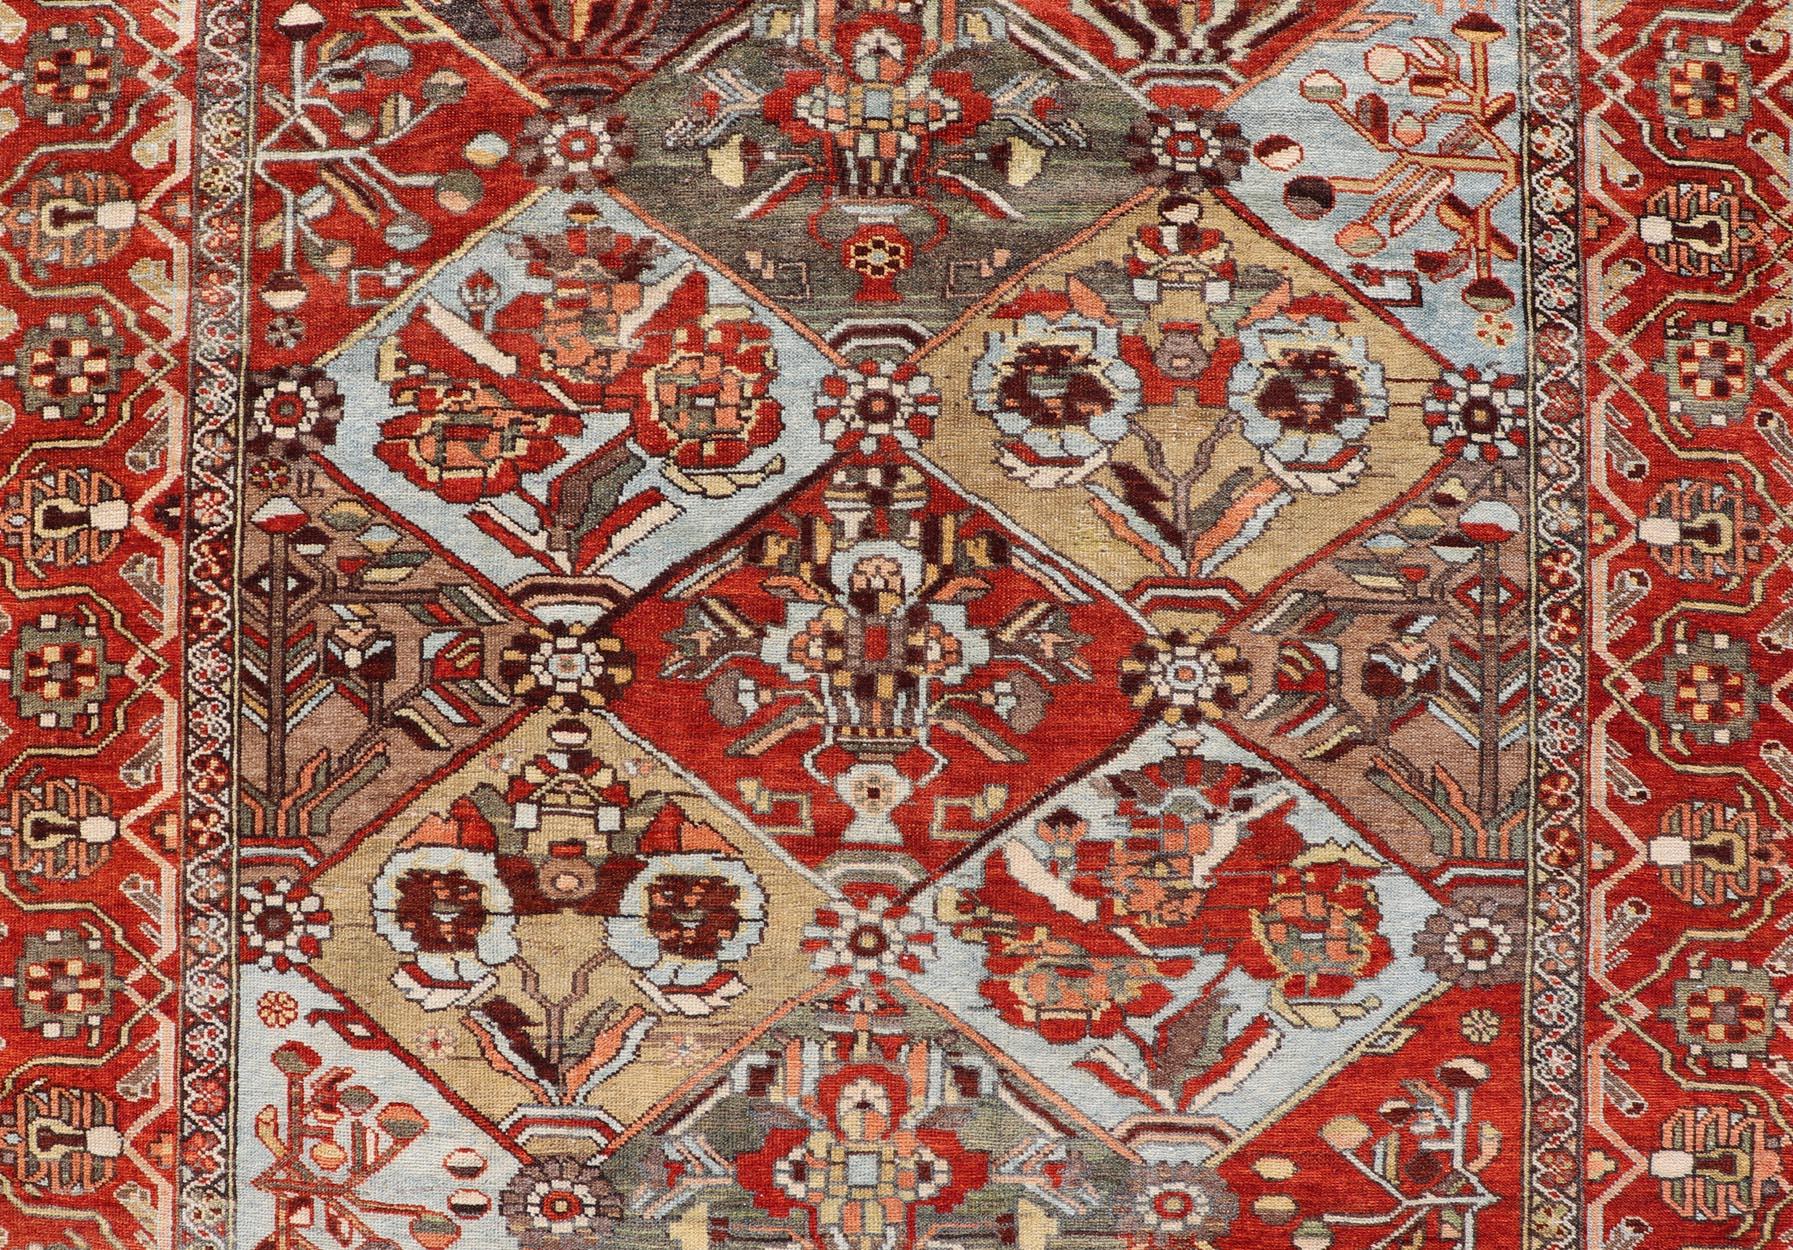 Antique Persian Bakhitari Colorful Rug in All-Over Diamond Garden Design  For Sale 2